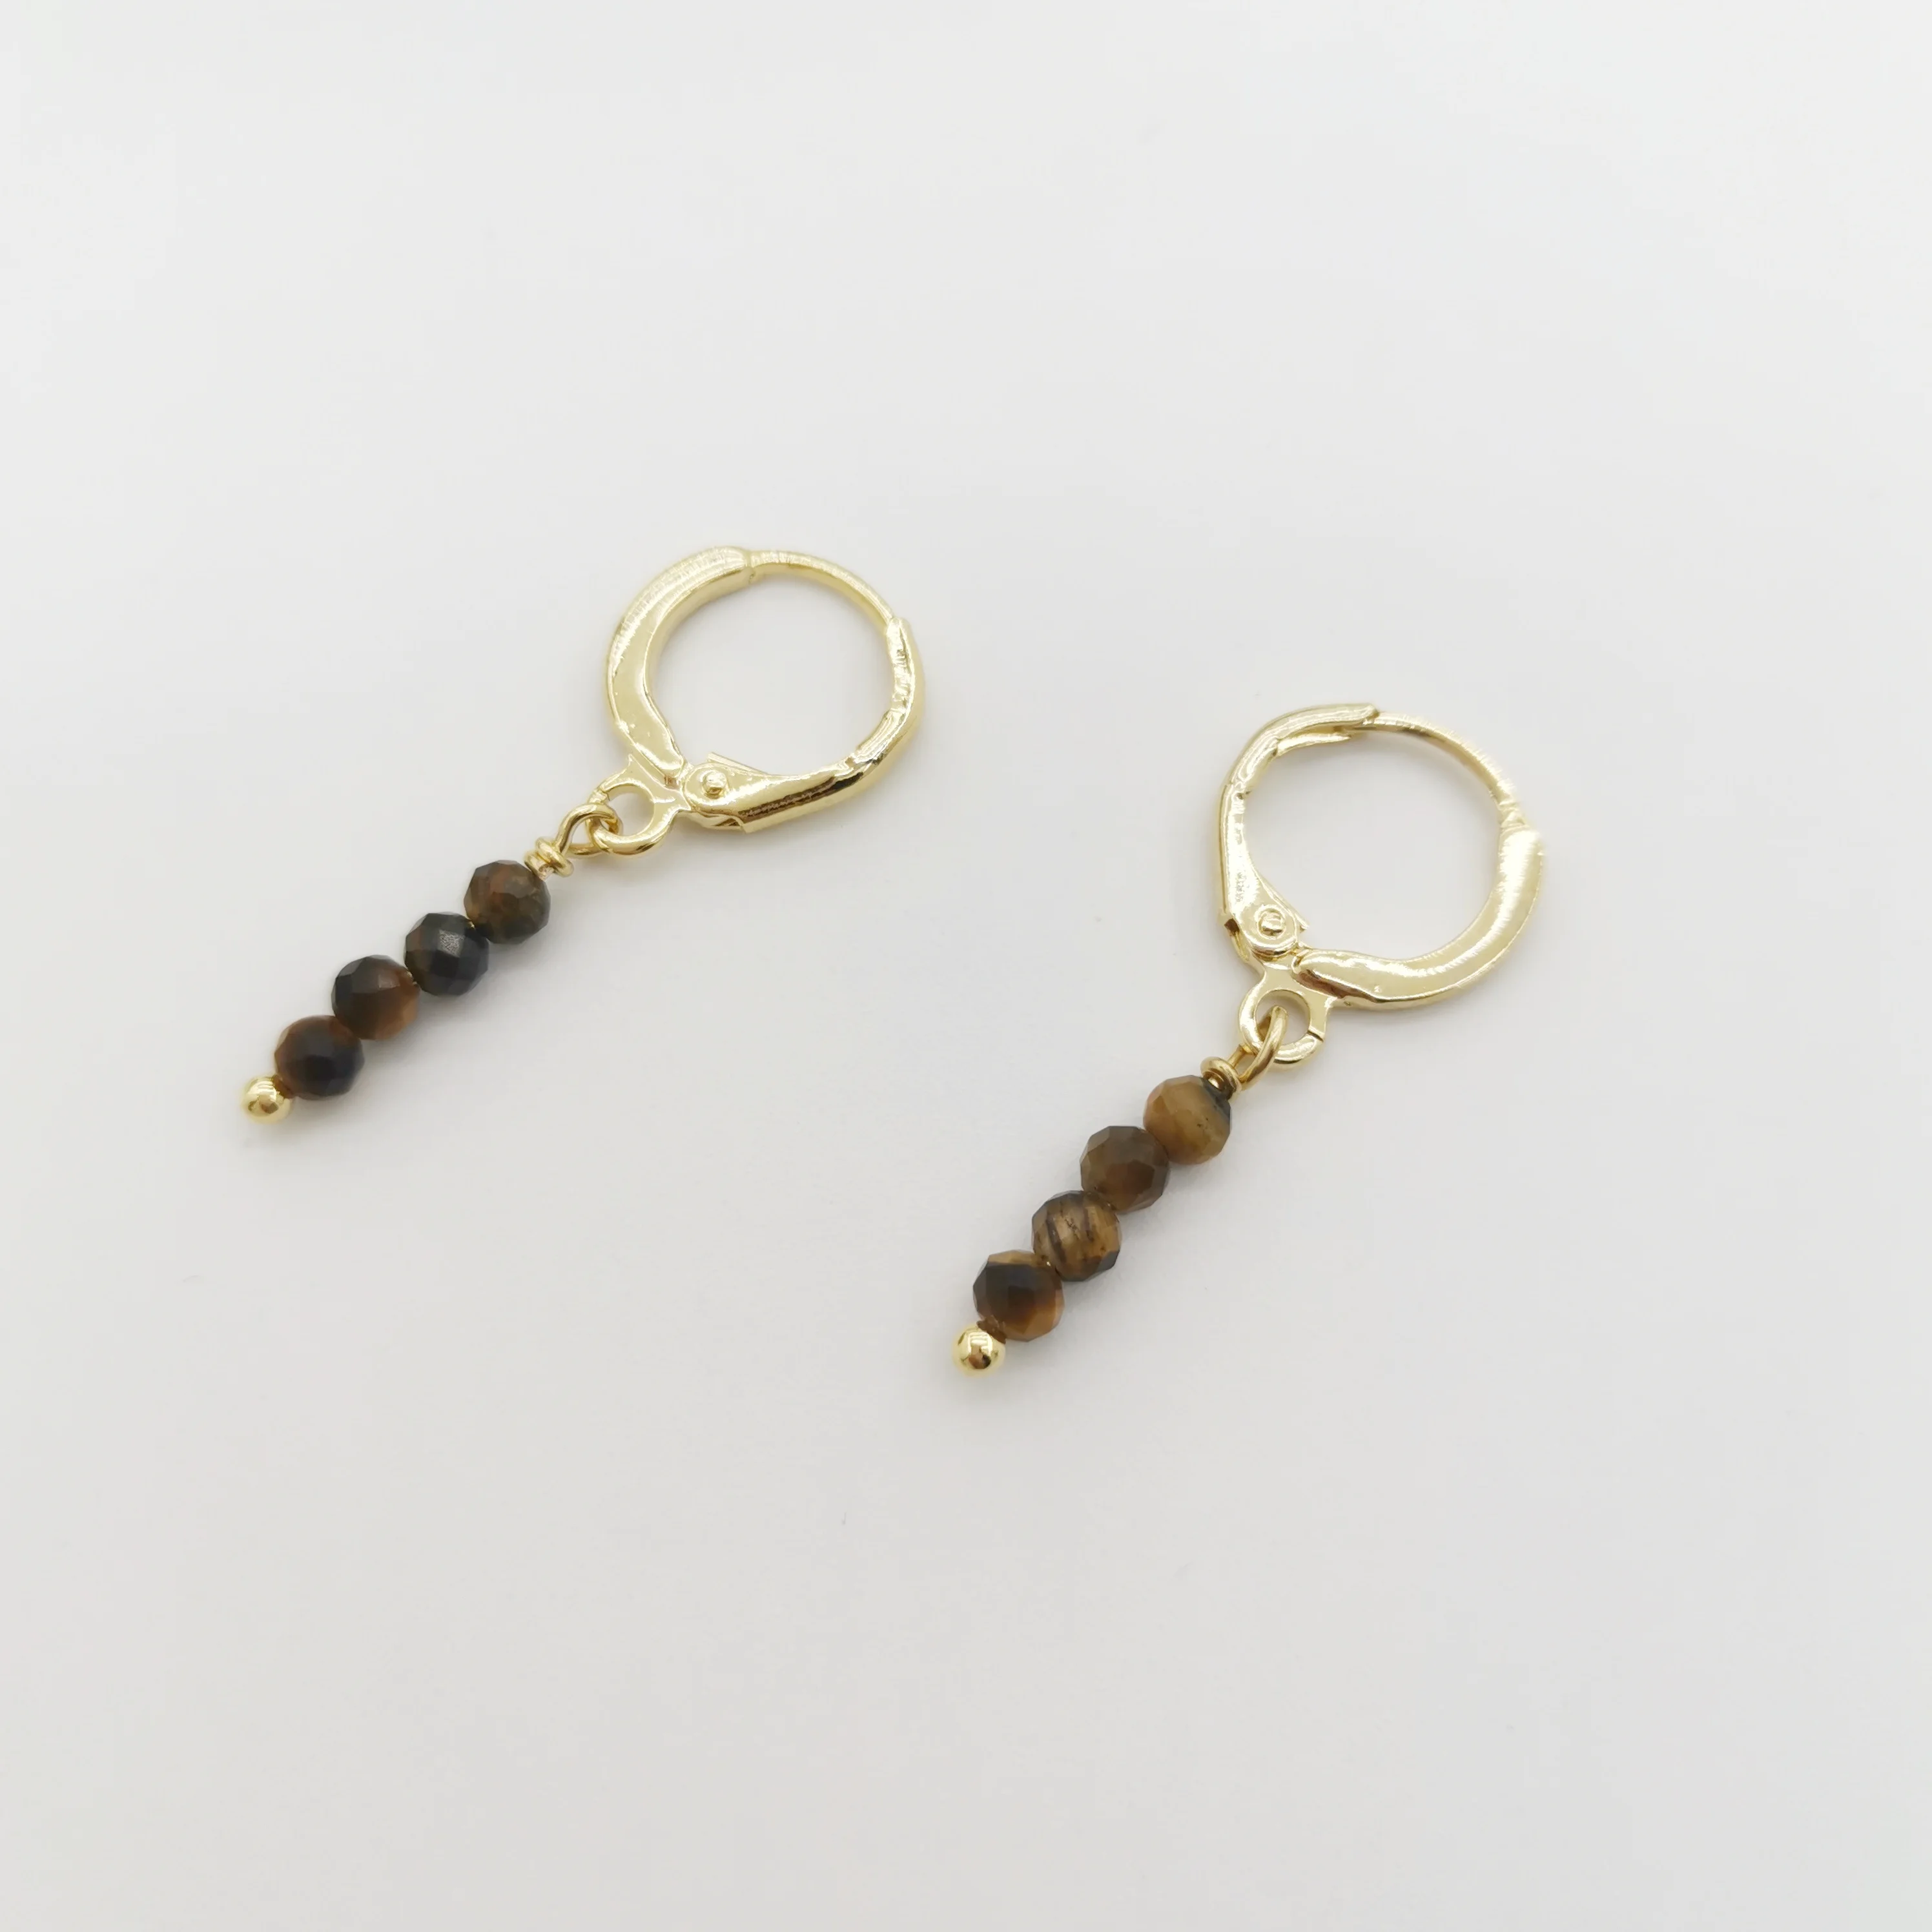 

Natural Stones Geniune Faceted Tiger Eye Bar Earrings Gemstones 14K Gold Filled Hoops Simple Dangle Boho Earrings For Women Gift